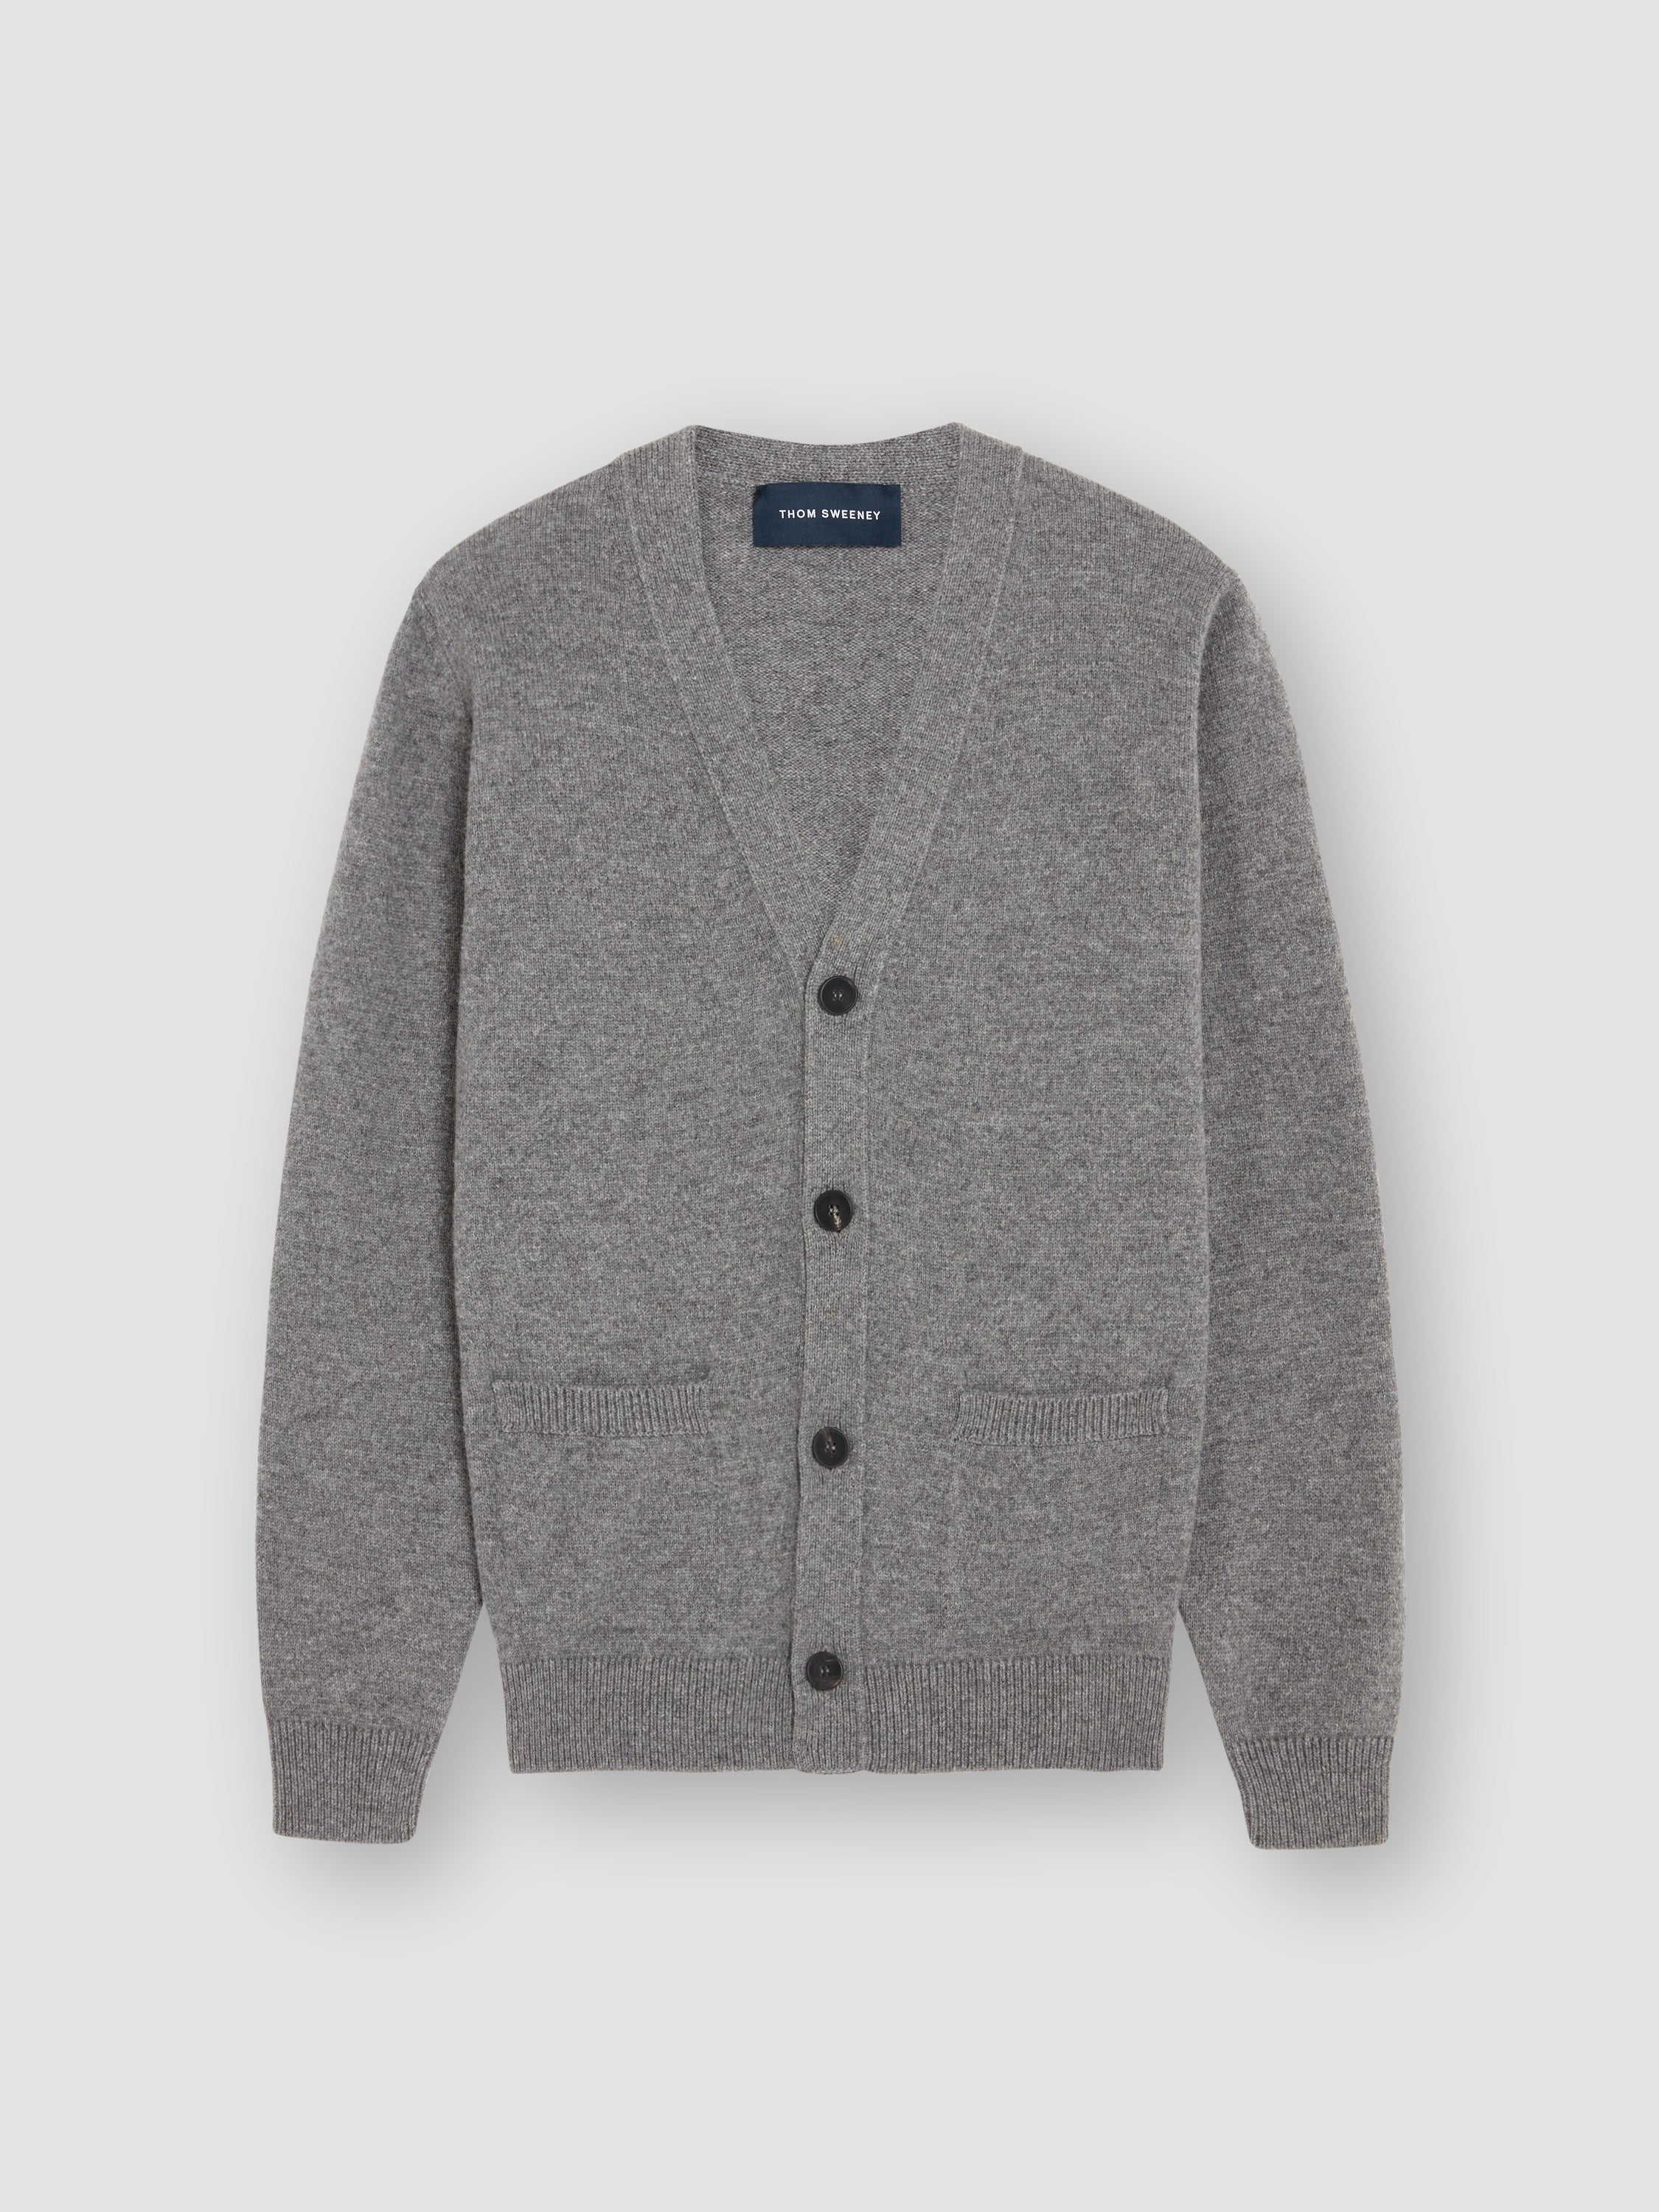 Wool Cashmere Lightweight Cardigan Grey Product Image